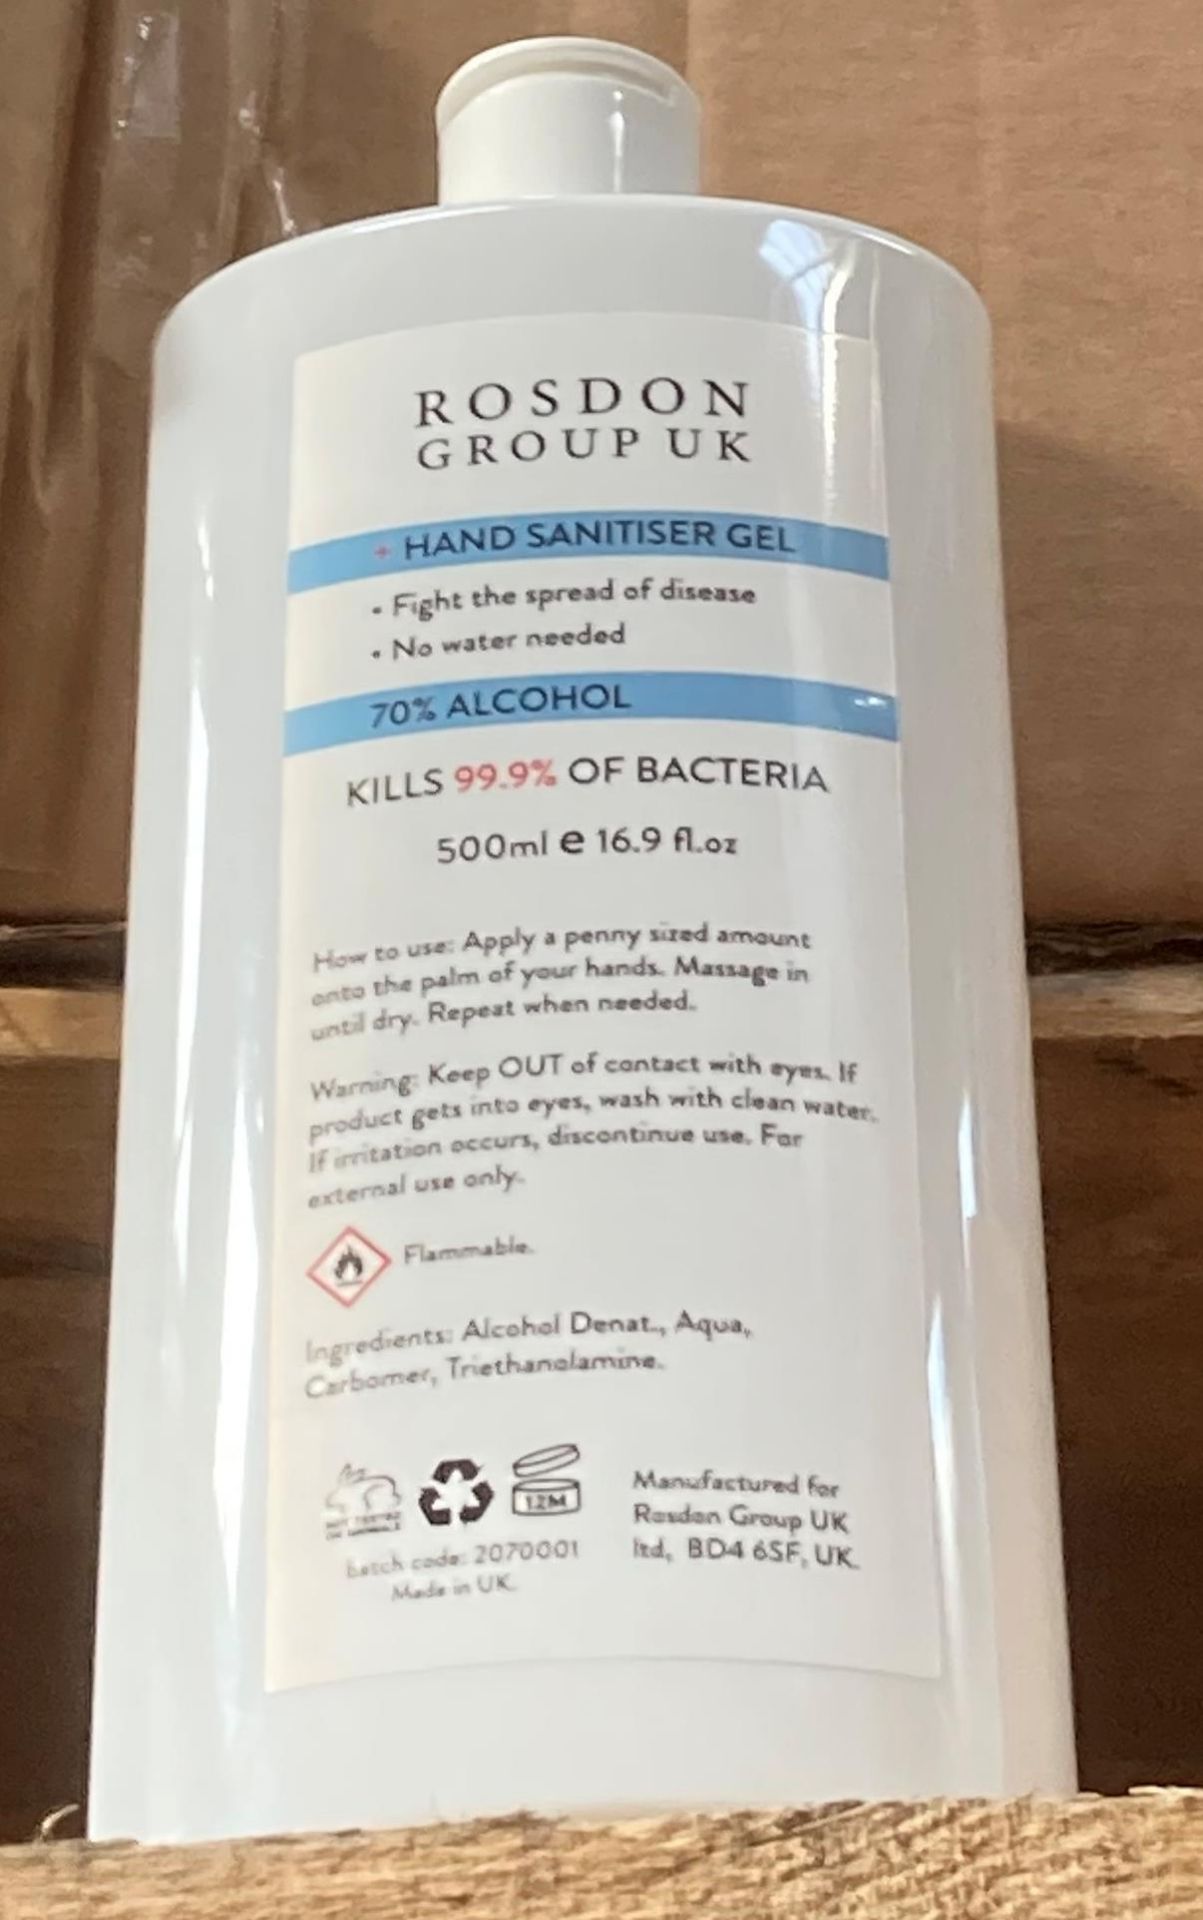 Five boxes of Rosdon Group hand sanitiser gel 500ml (36 units per box)